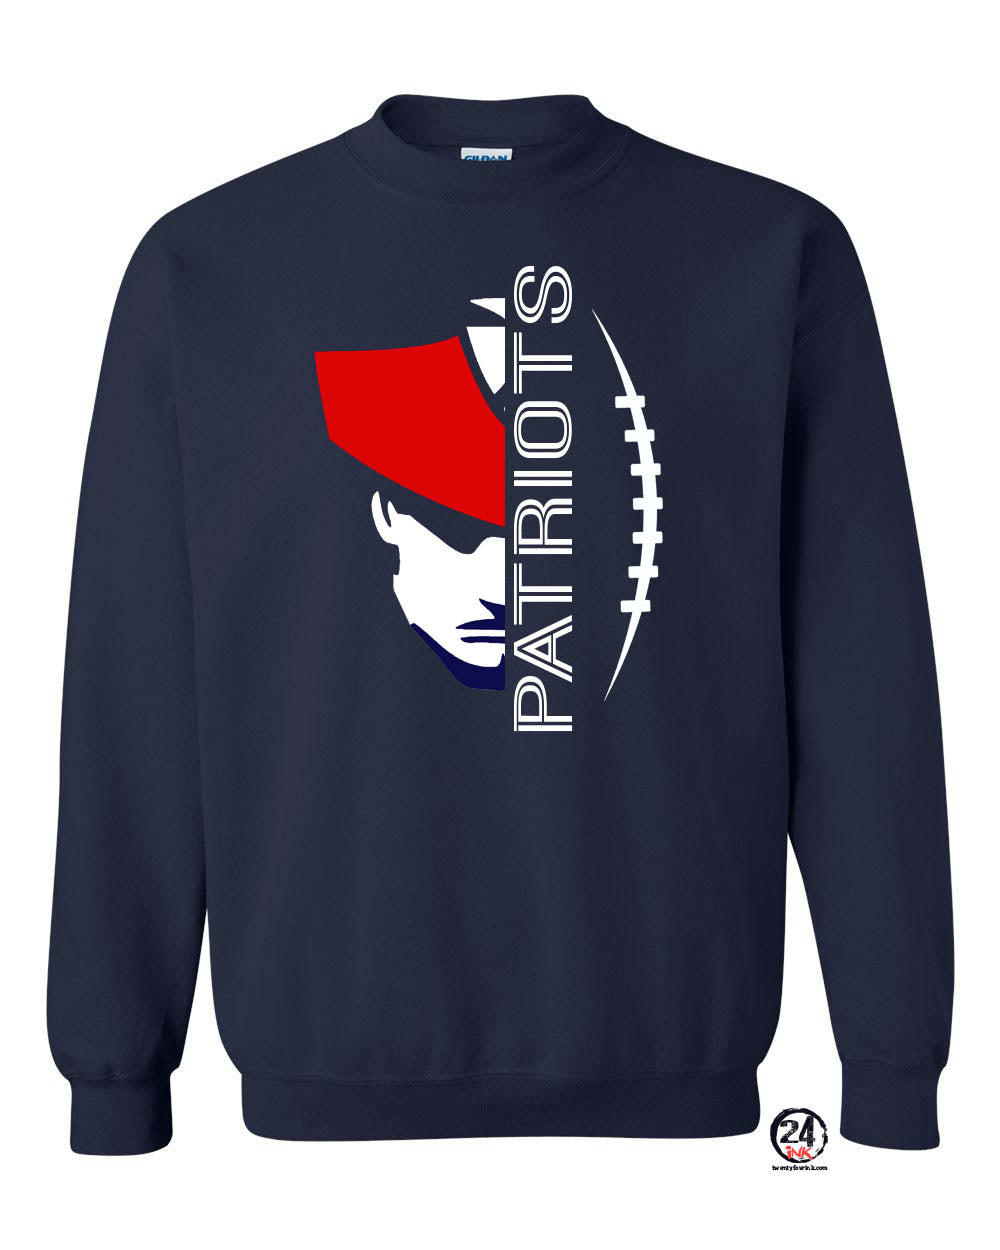 NW Football Design 5 non hooded sweatshirt